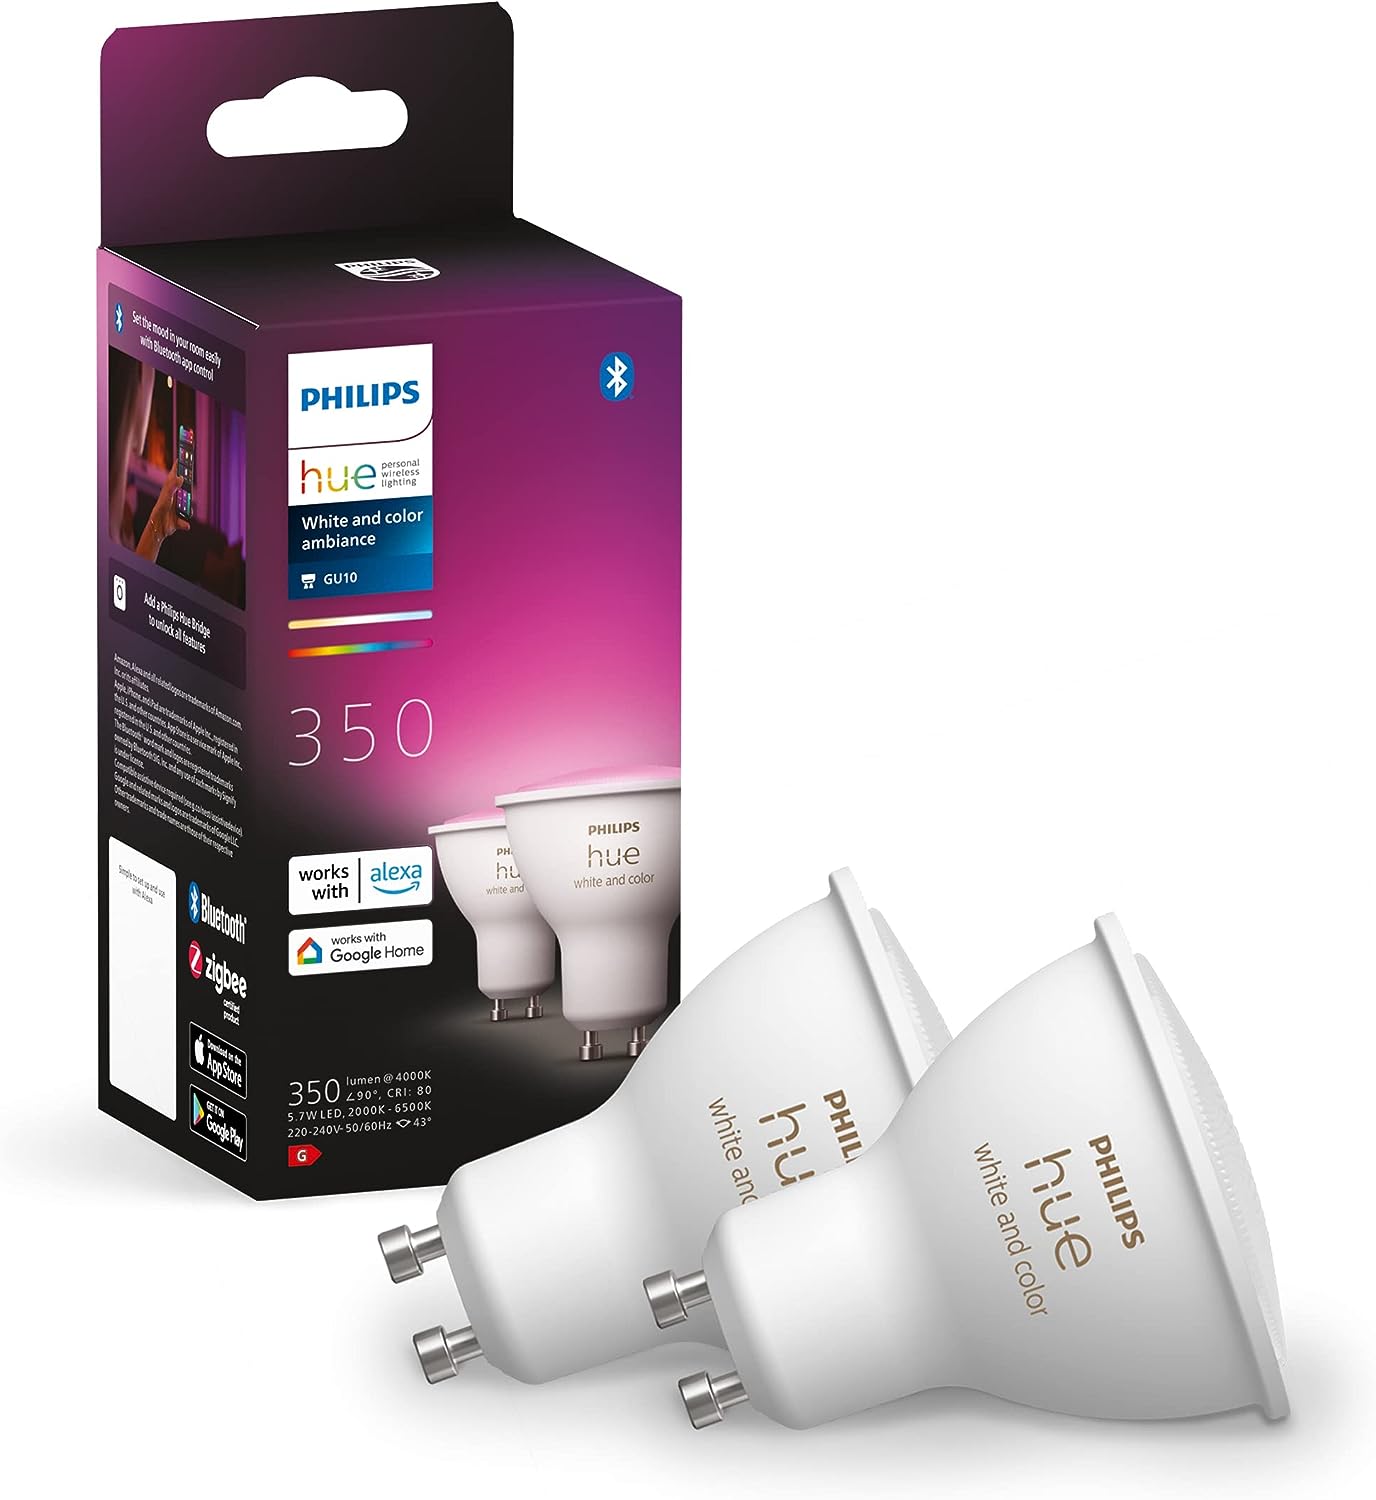 Philips Hue White & Color Ambiance GU10 LED Lampe Doppelpack, 2x350lm, dimmbar, bis zu 16 Millionen Farben, steuerbar via App, kompatibel mit Amazon Alexa (Echo, Echo Dot)